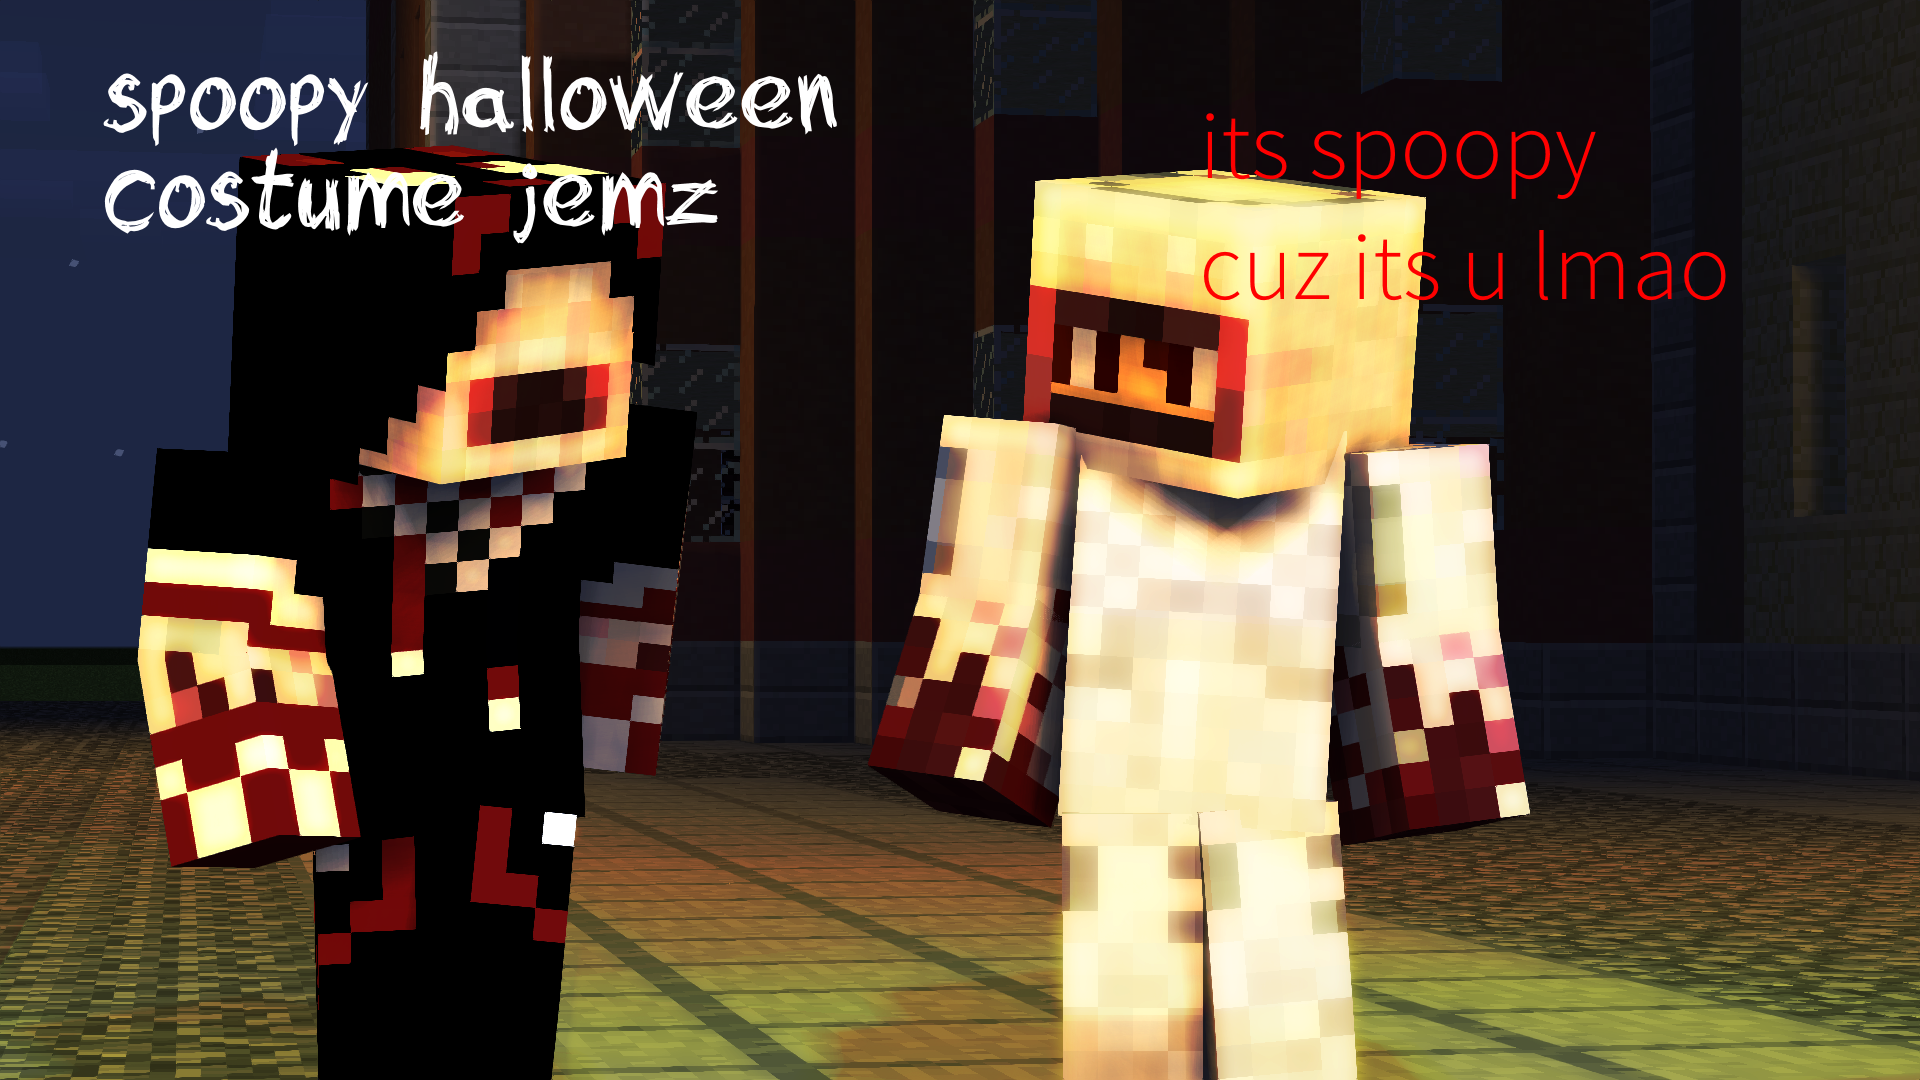 Jemz and Ati's spoopy halloween costumes lmao WALLPAPER